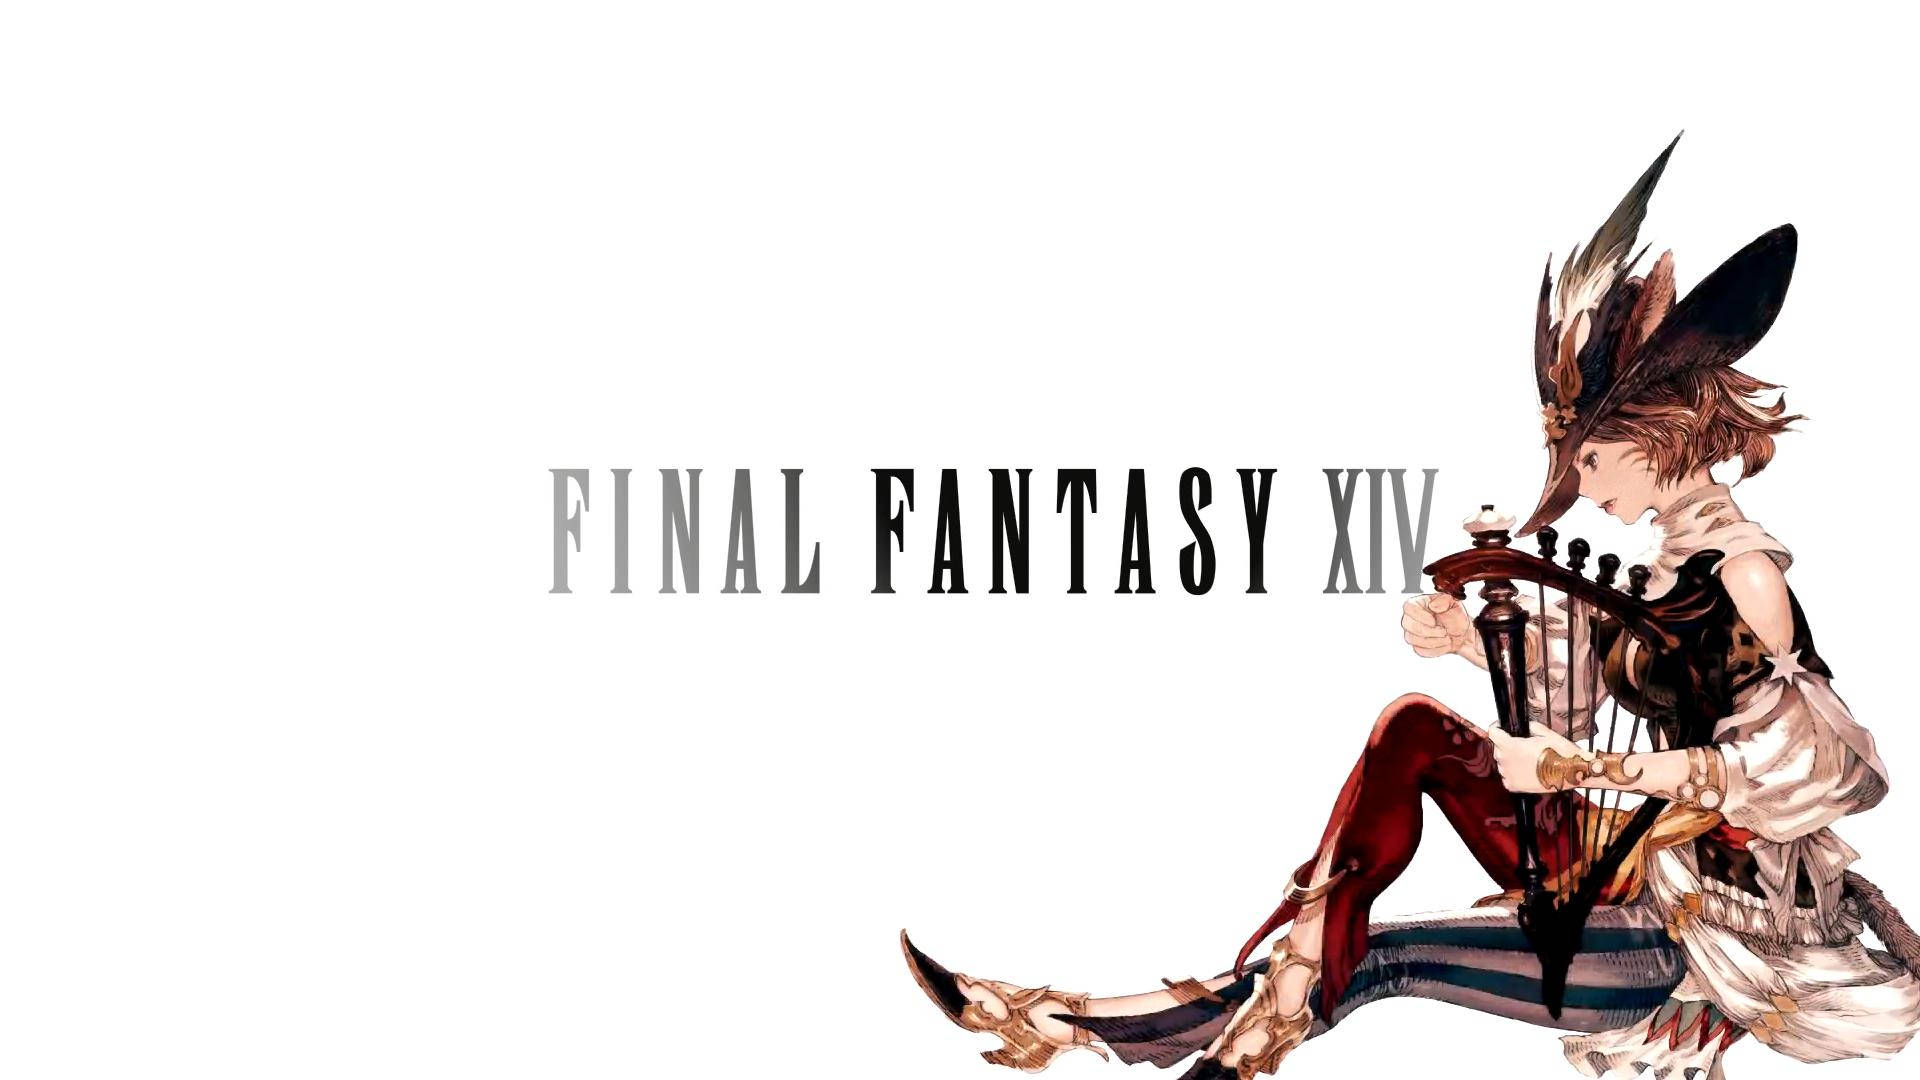 Exploreo Mundo Imersivo De Final Fantasy Xiv! Papel de Parede